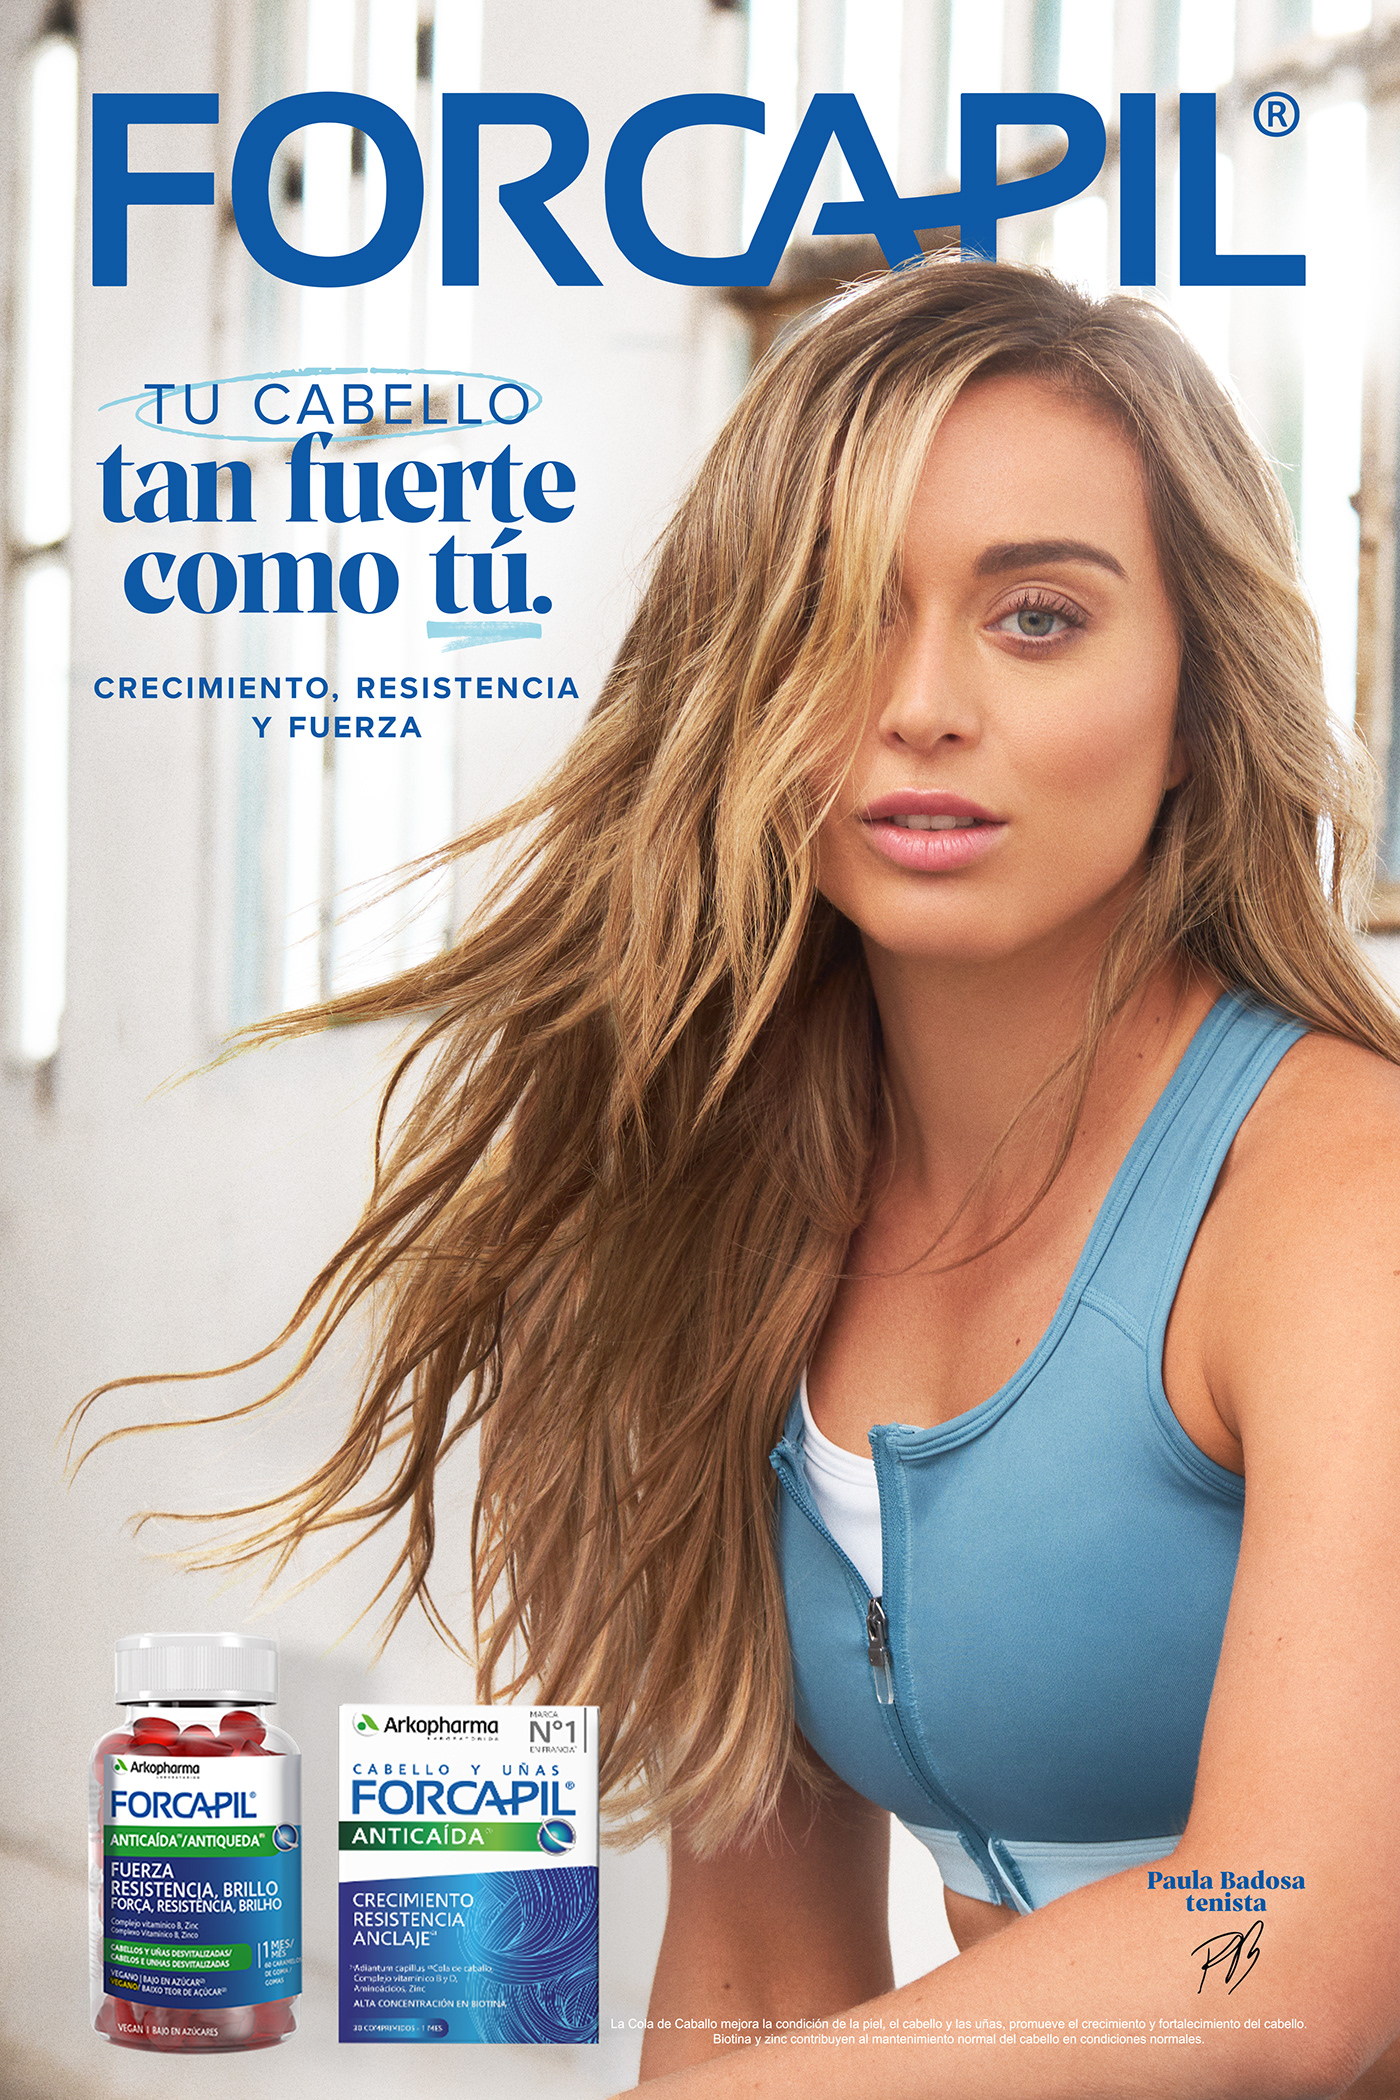 тв TvCommercial print Advertising  cosmetics hair haircare beauty